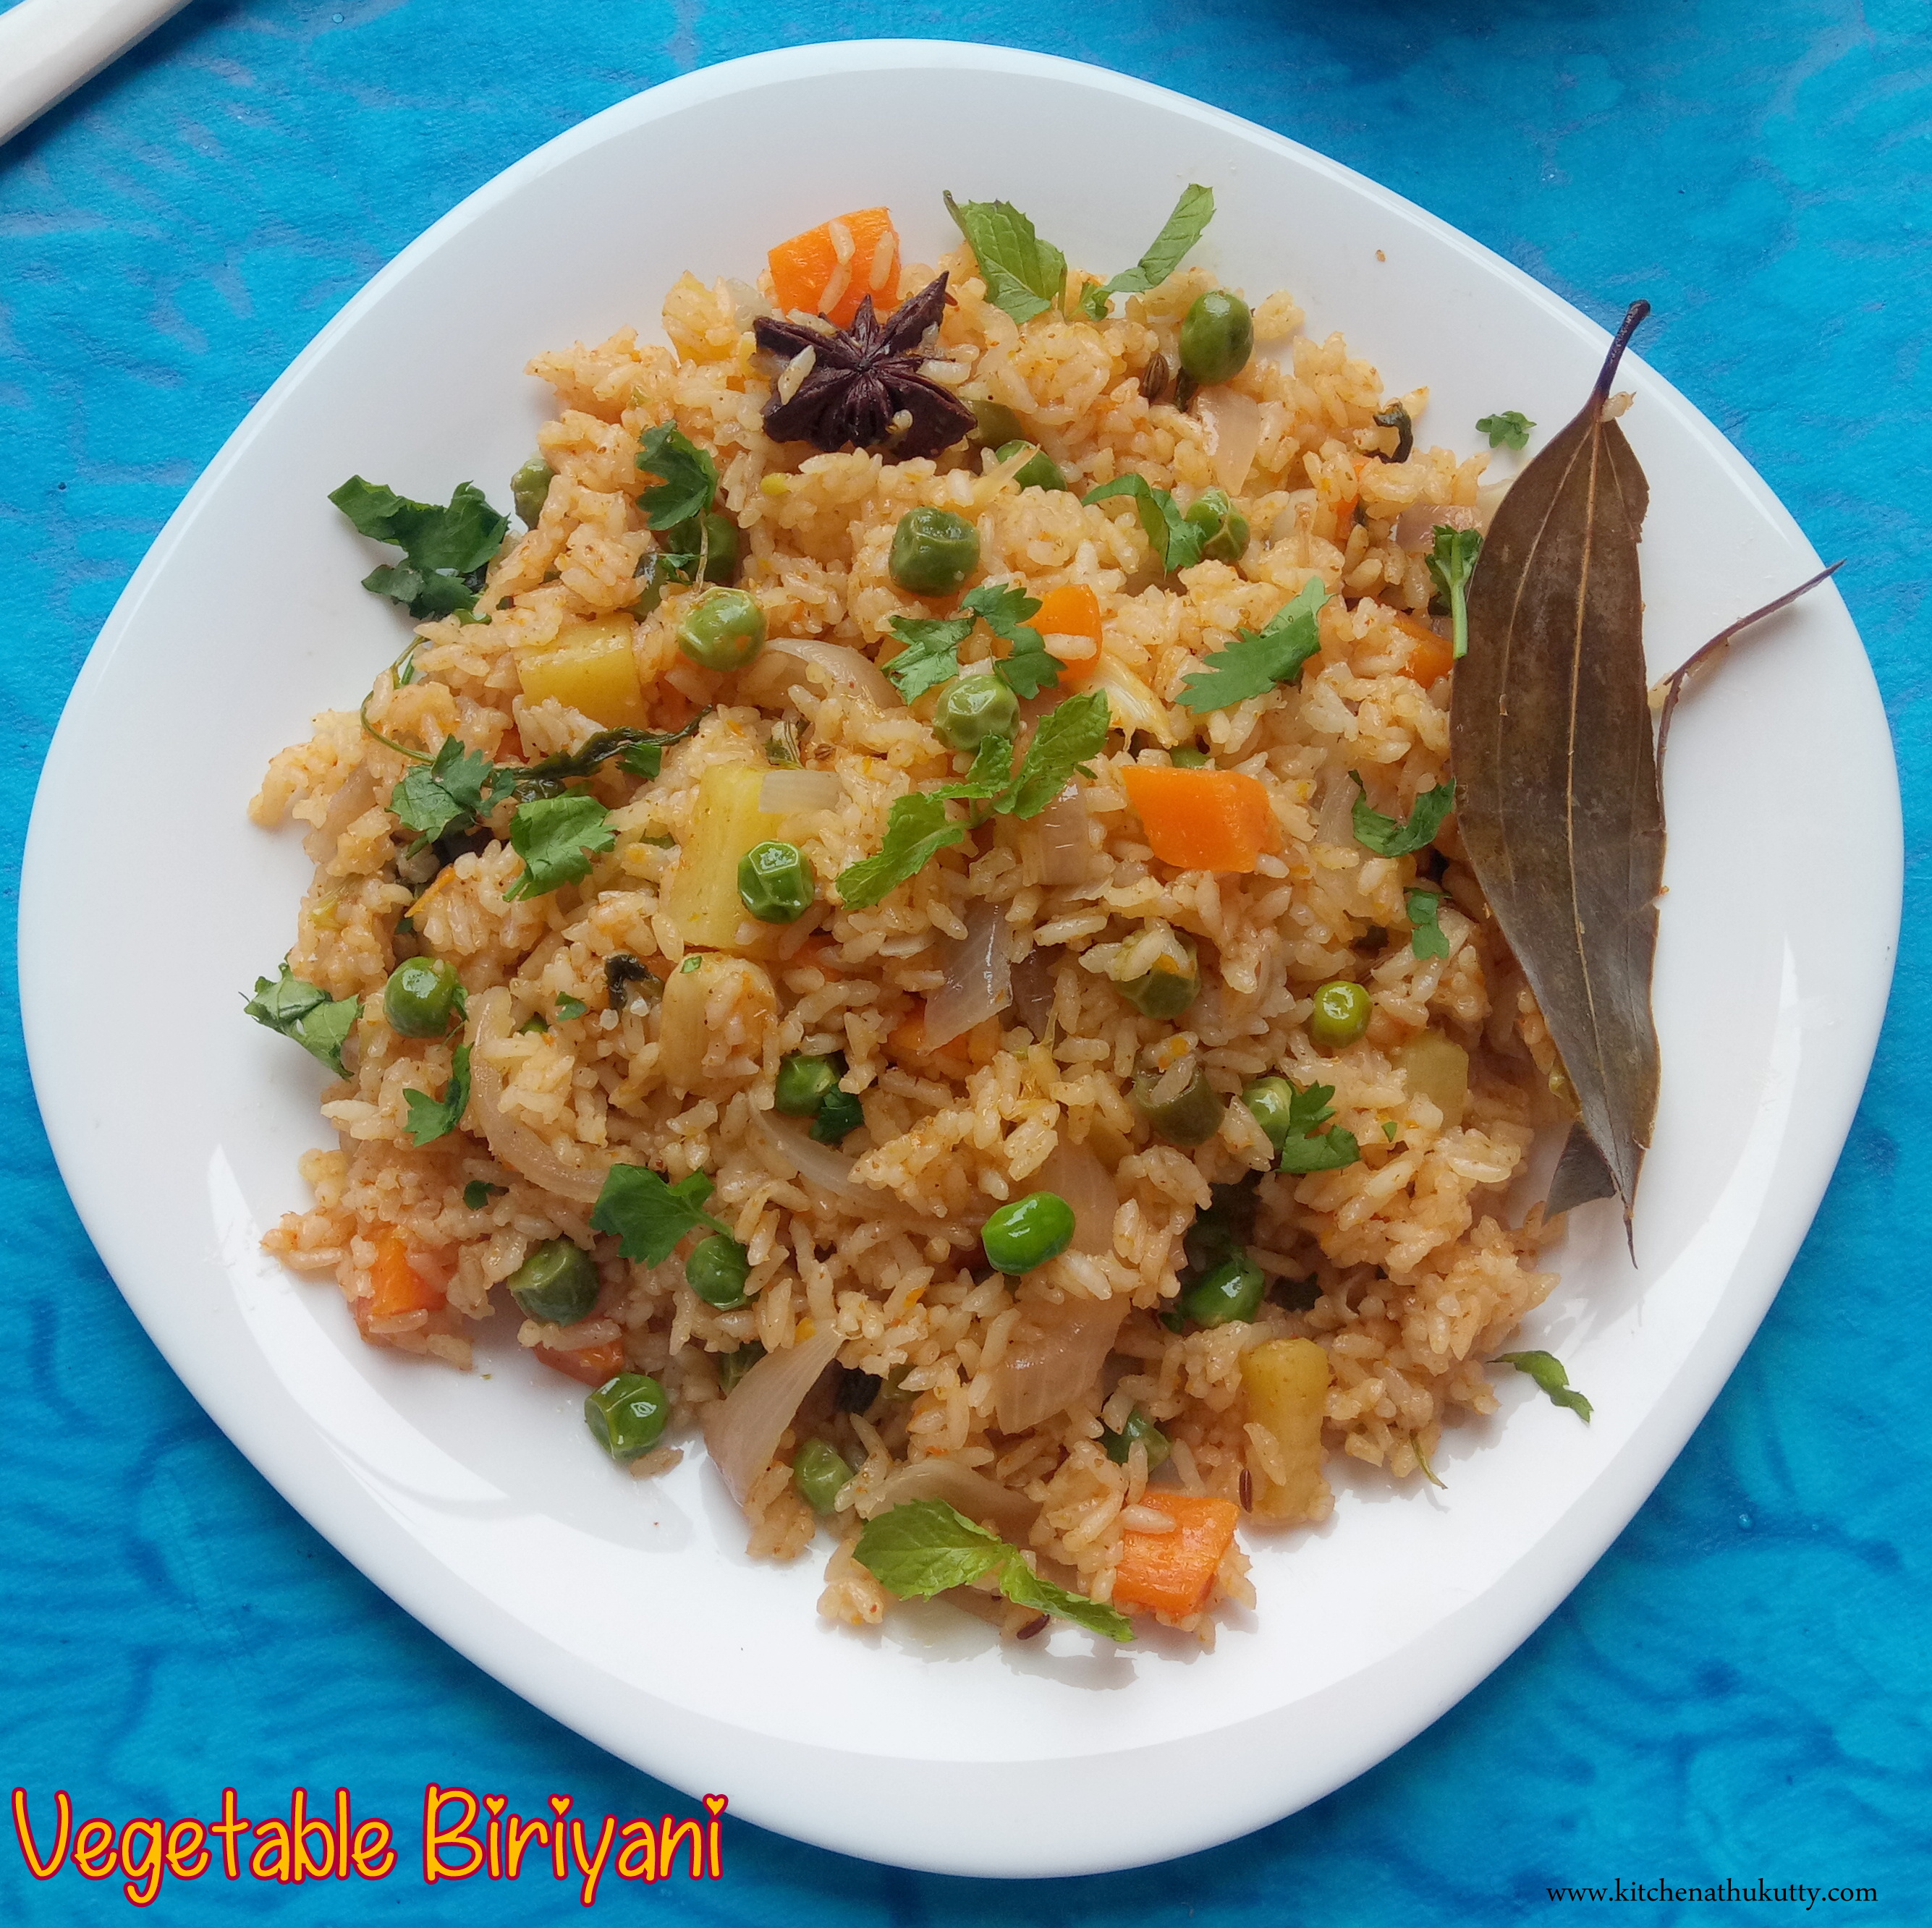 Vegetable Biriyani Recipe